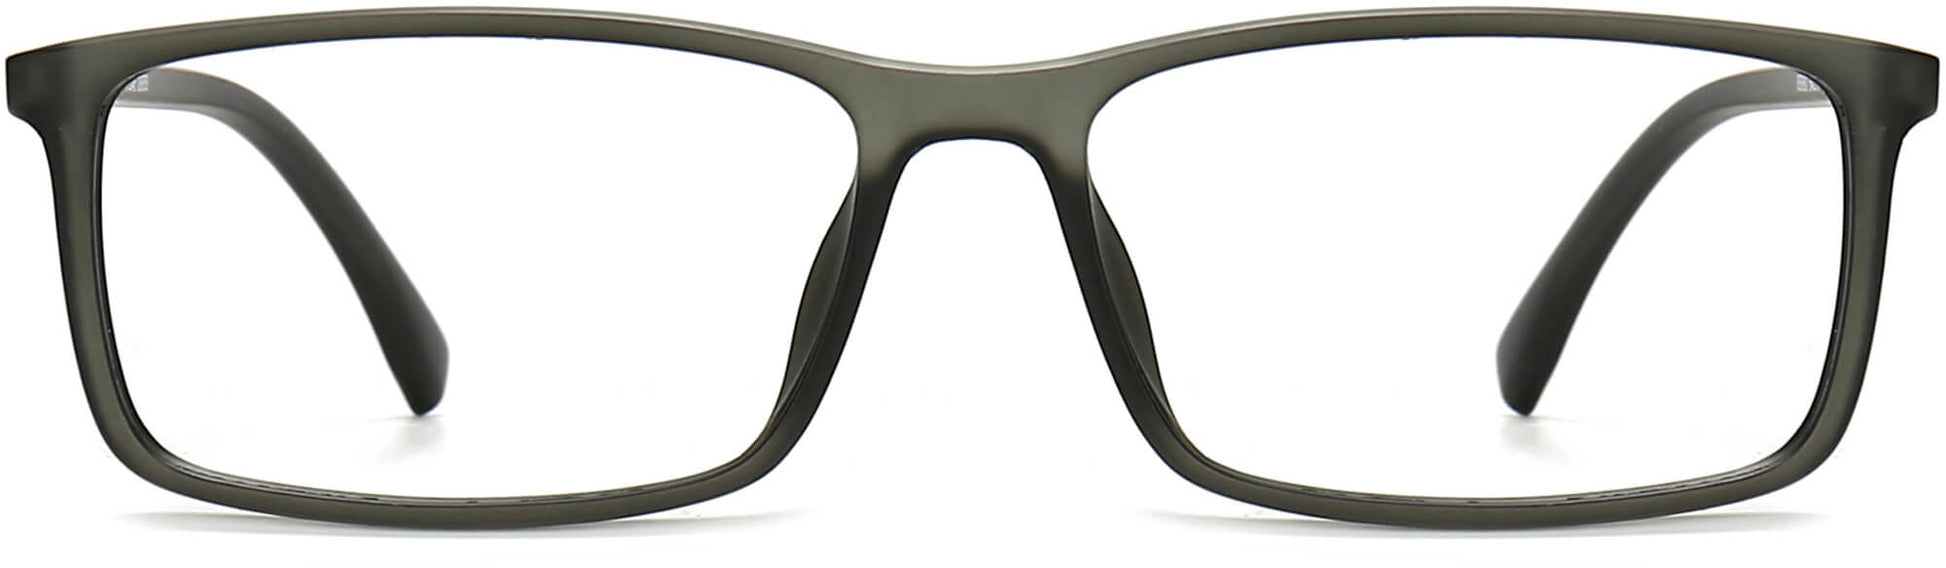 Otis Rectangle Gray Eyeglasses from ANRRI, front view